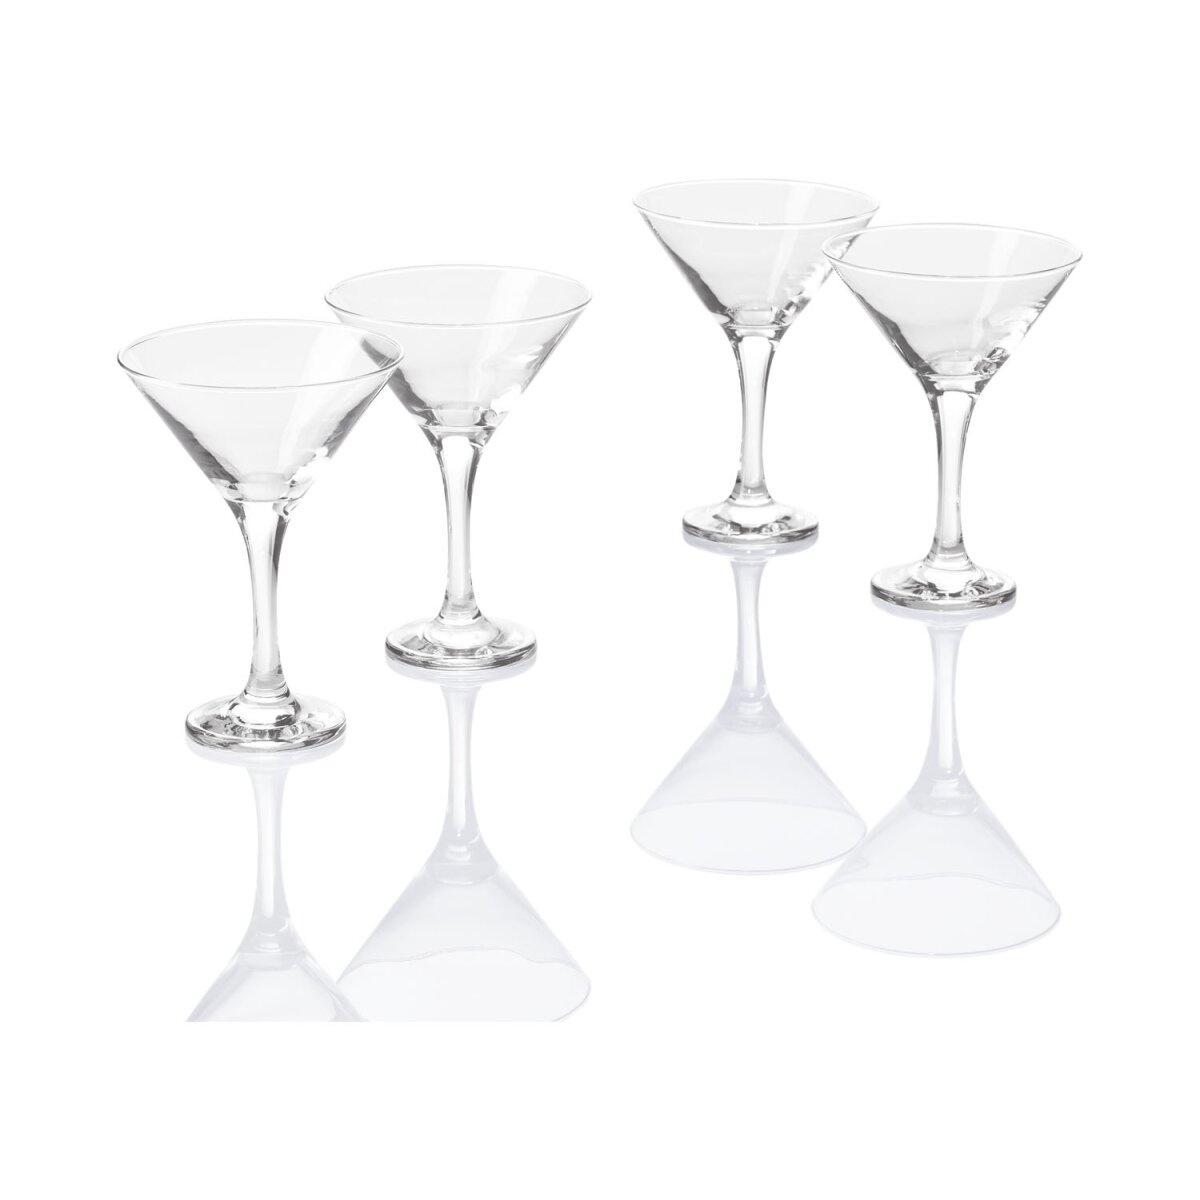 ERNESTO® Cocktail-Gläser, 4er-Sets (Martini) - B-Ware sehr gut, 5,59 €